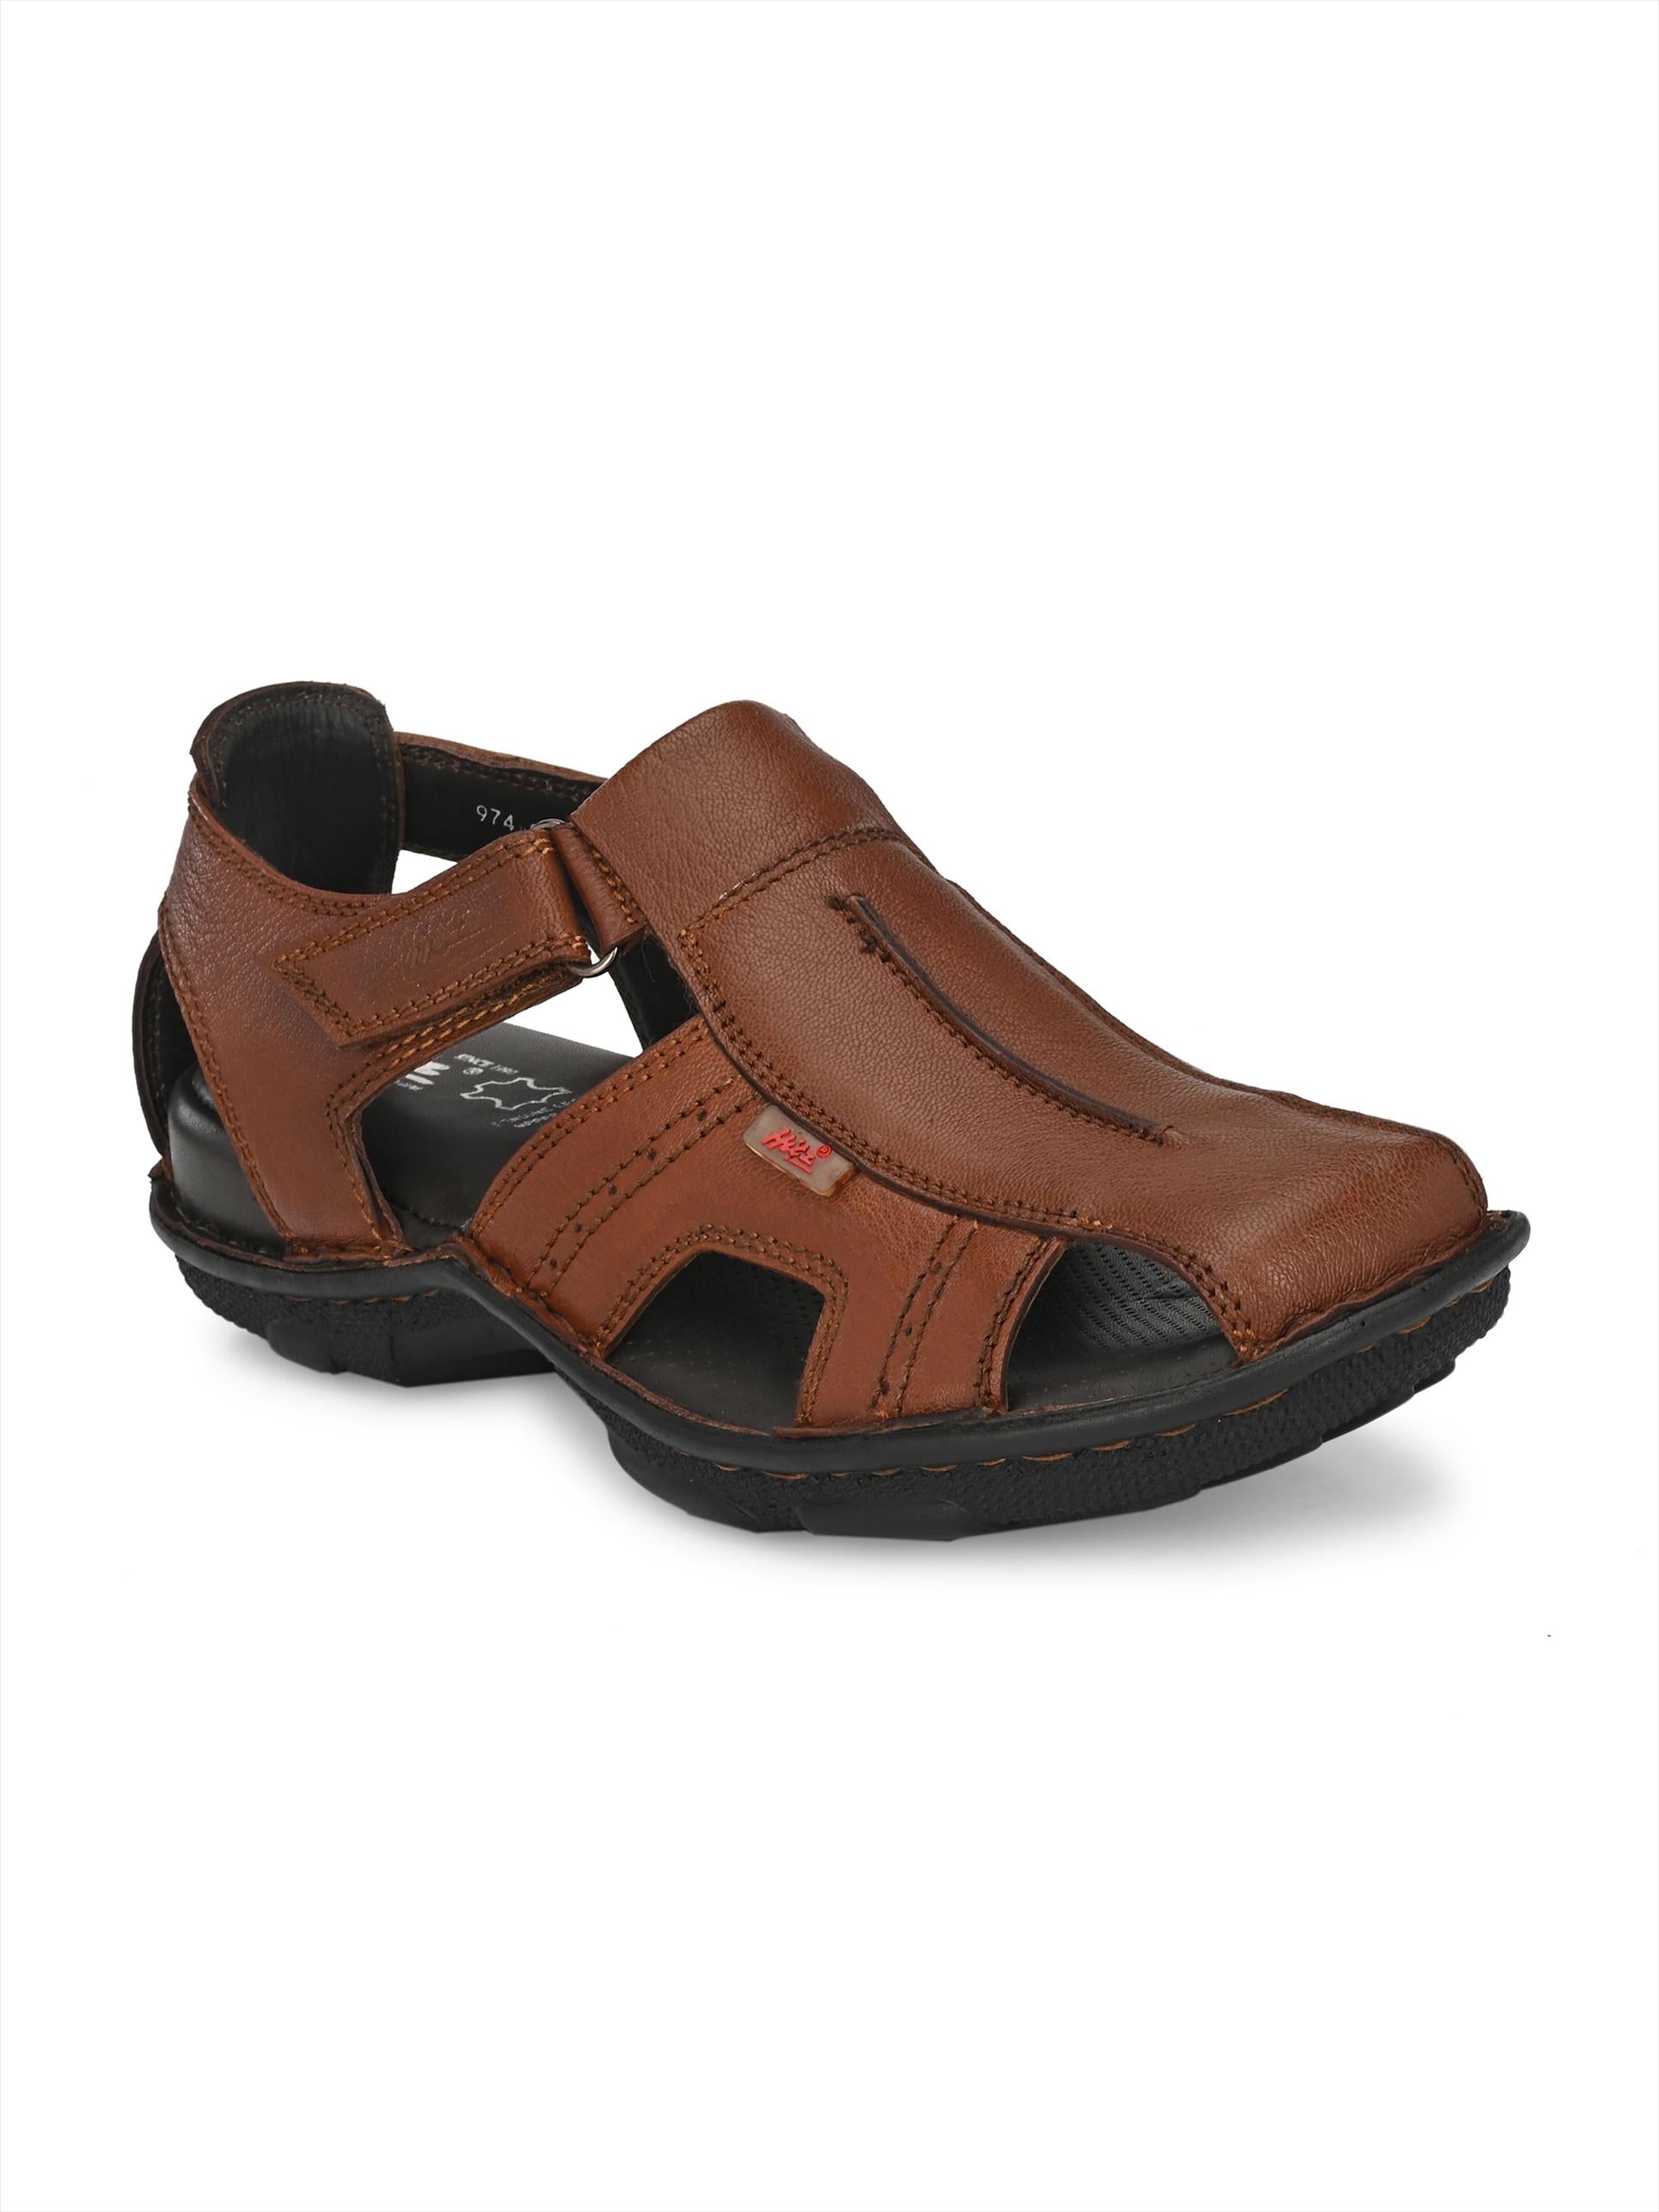 Hitz Men's Tan Leather Comfort Sandals with Velcro Closure 40/6 / Tan